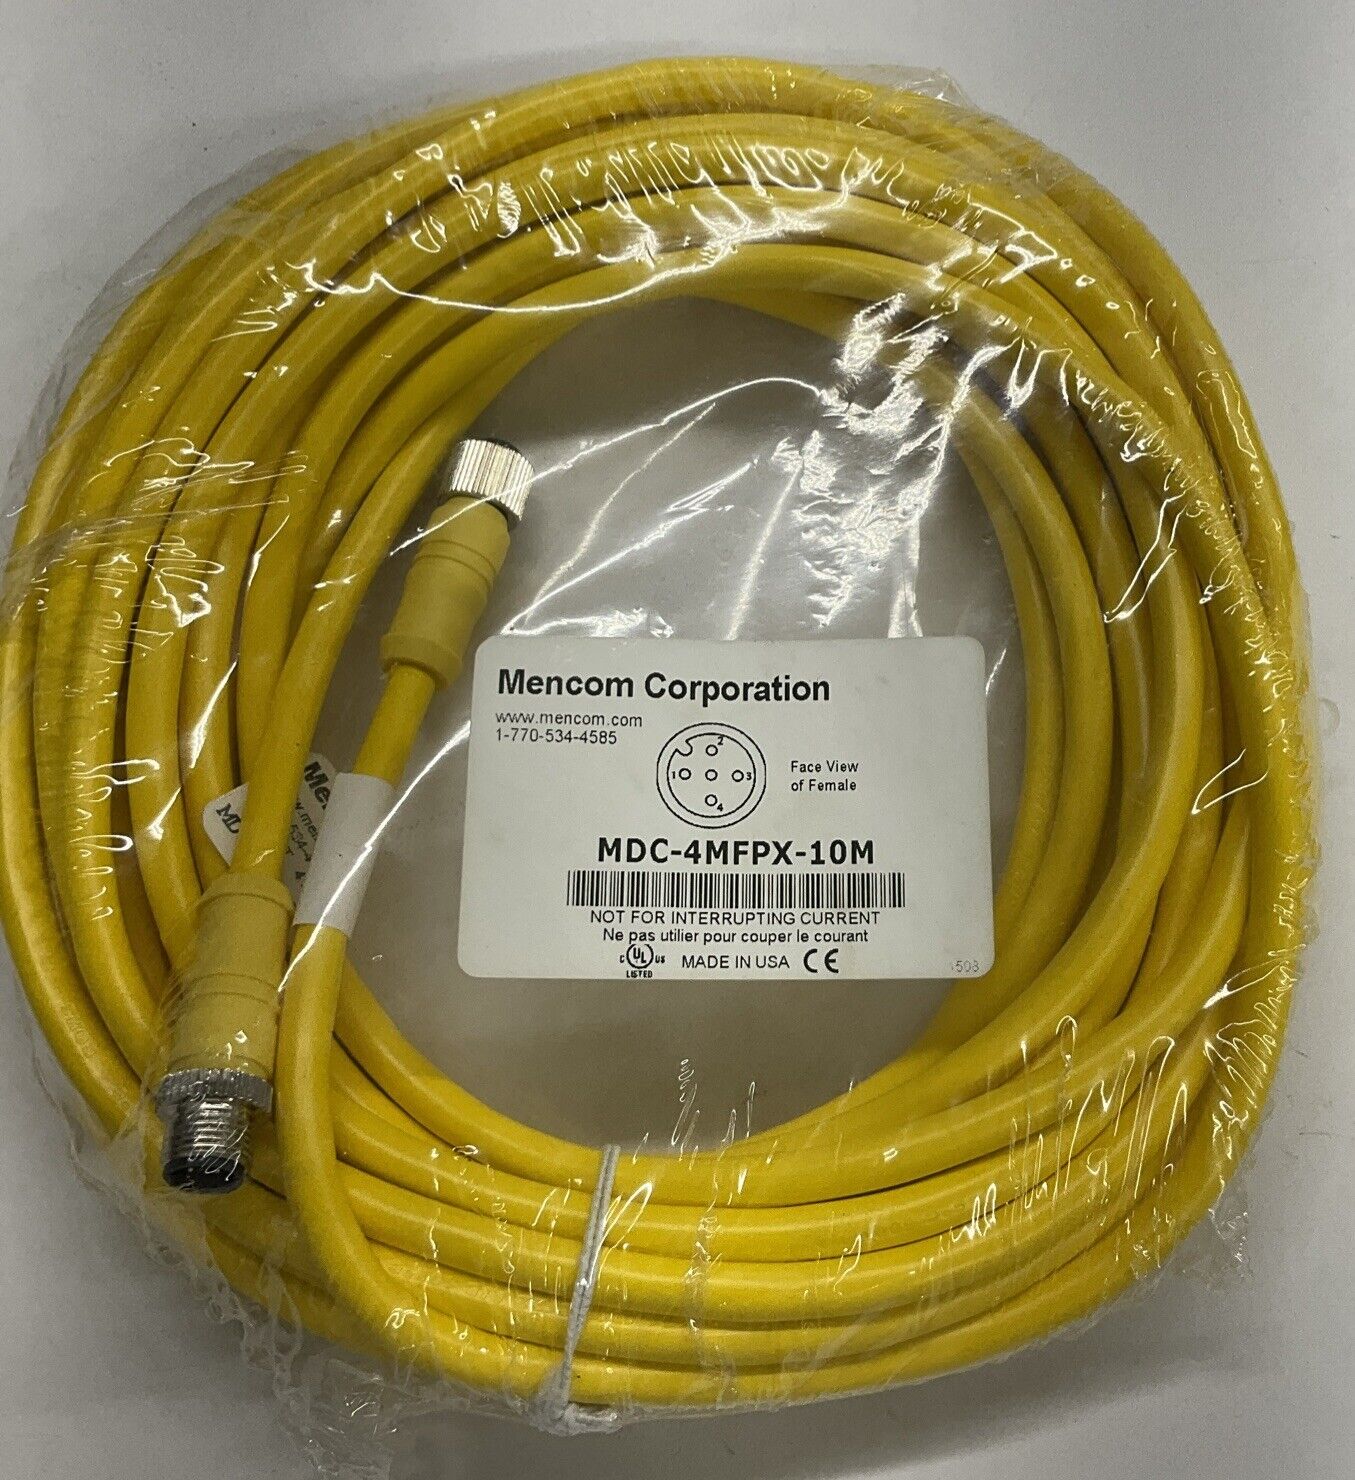 Mencom MDC-4MFPX-10M M12, Male/Female 4-Pole 10-Meter Cable (CBL116) - 0